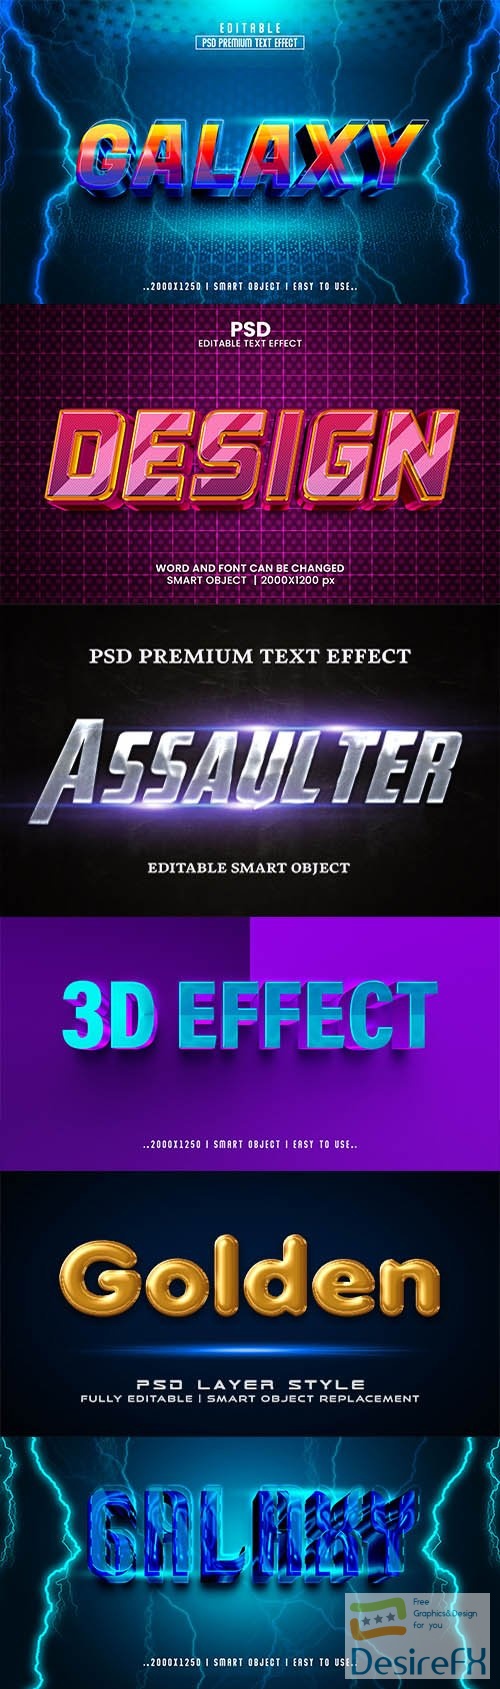 Psd style text effect editable set vol 51